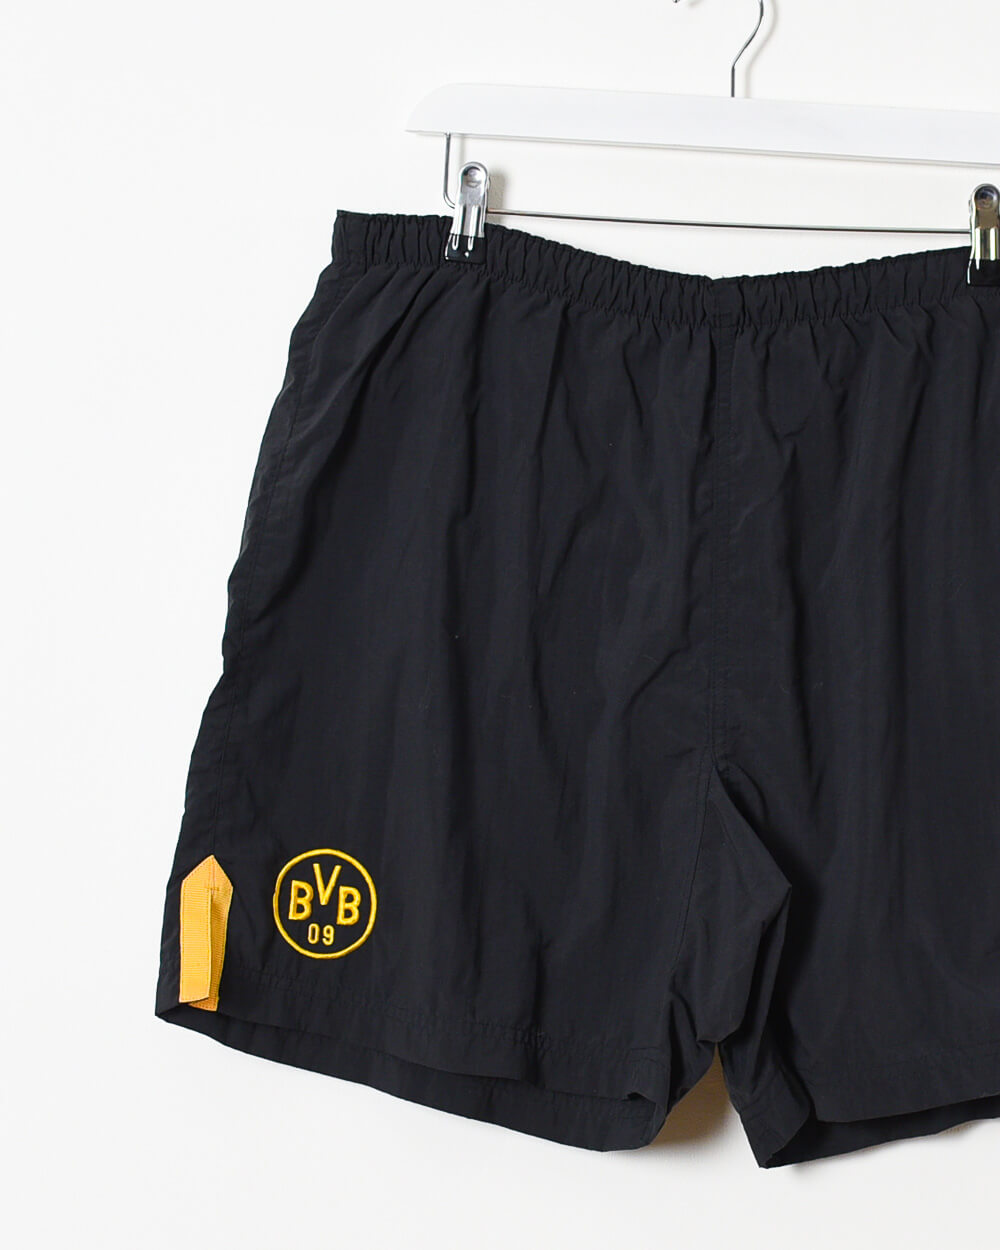 Black Nike BVB Shorts - W36